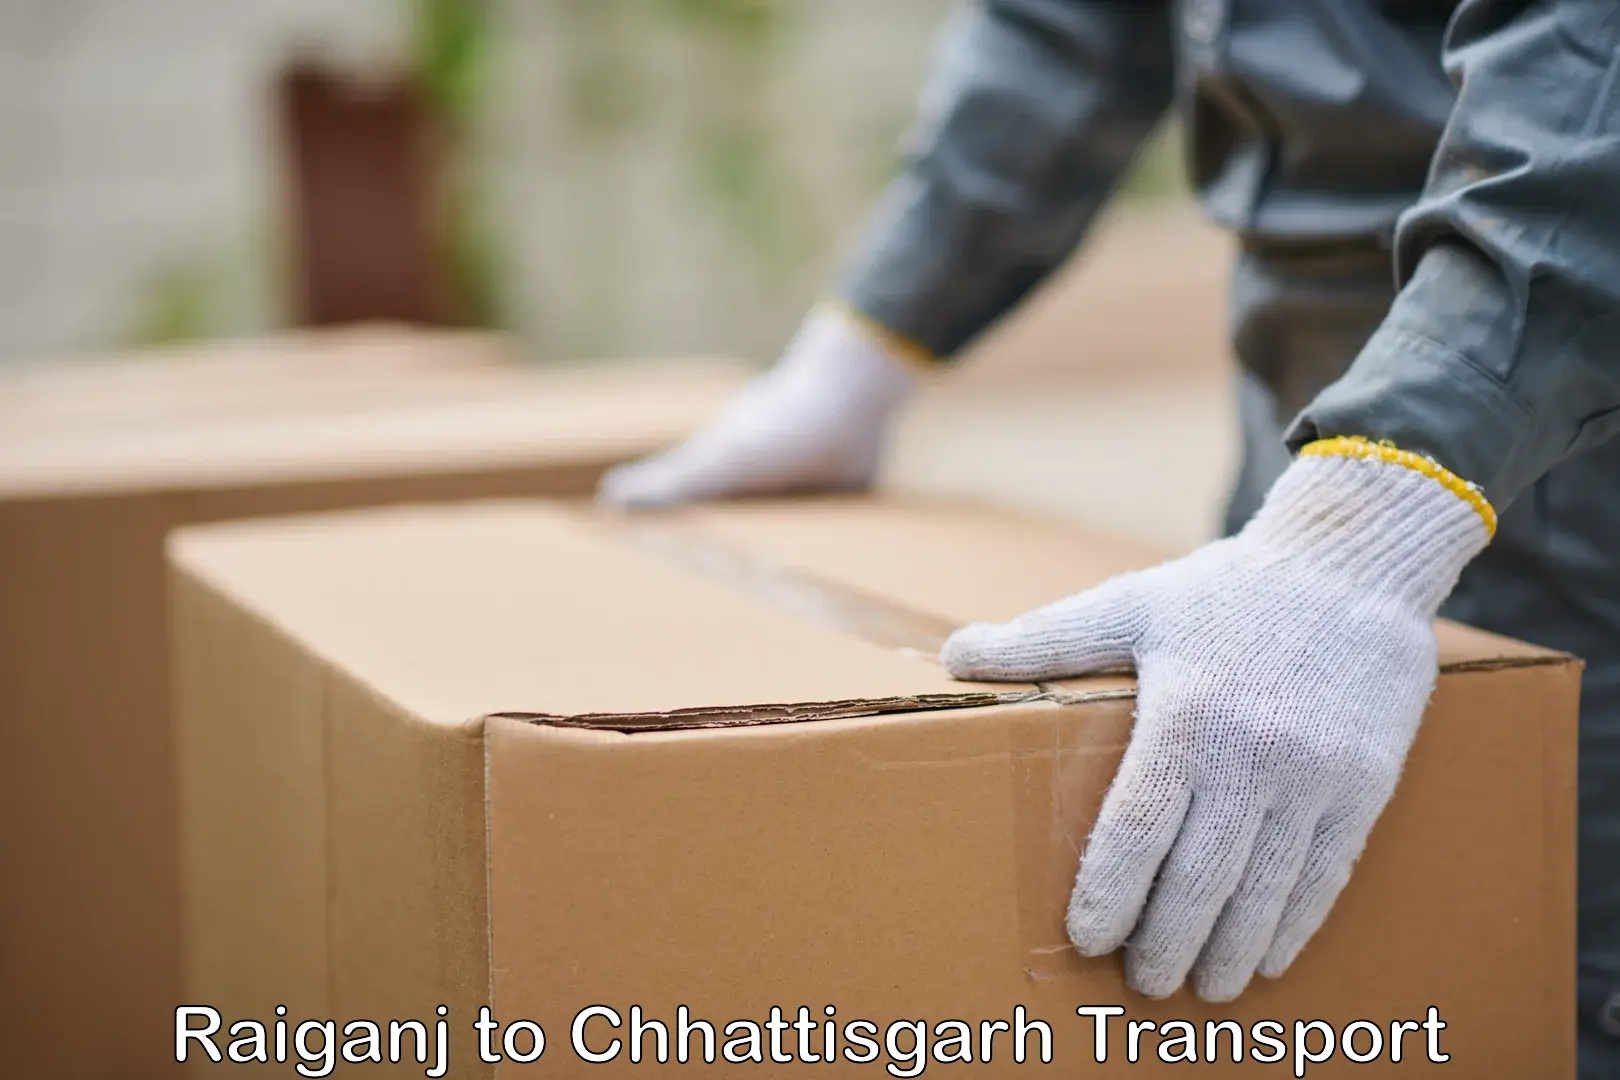 Delivery service Raiganj to Nagri